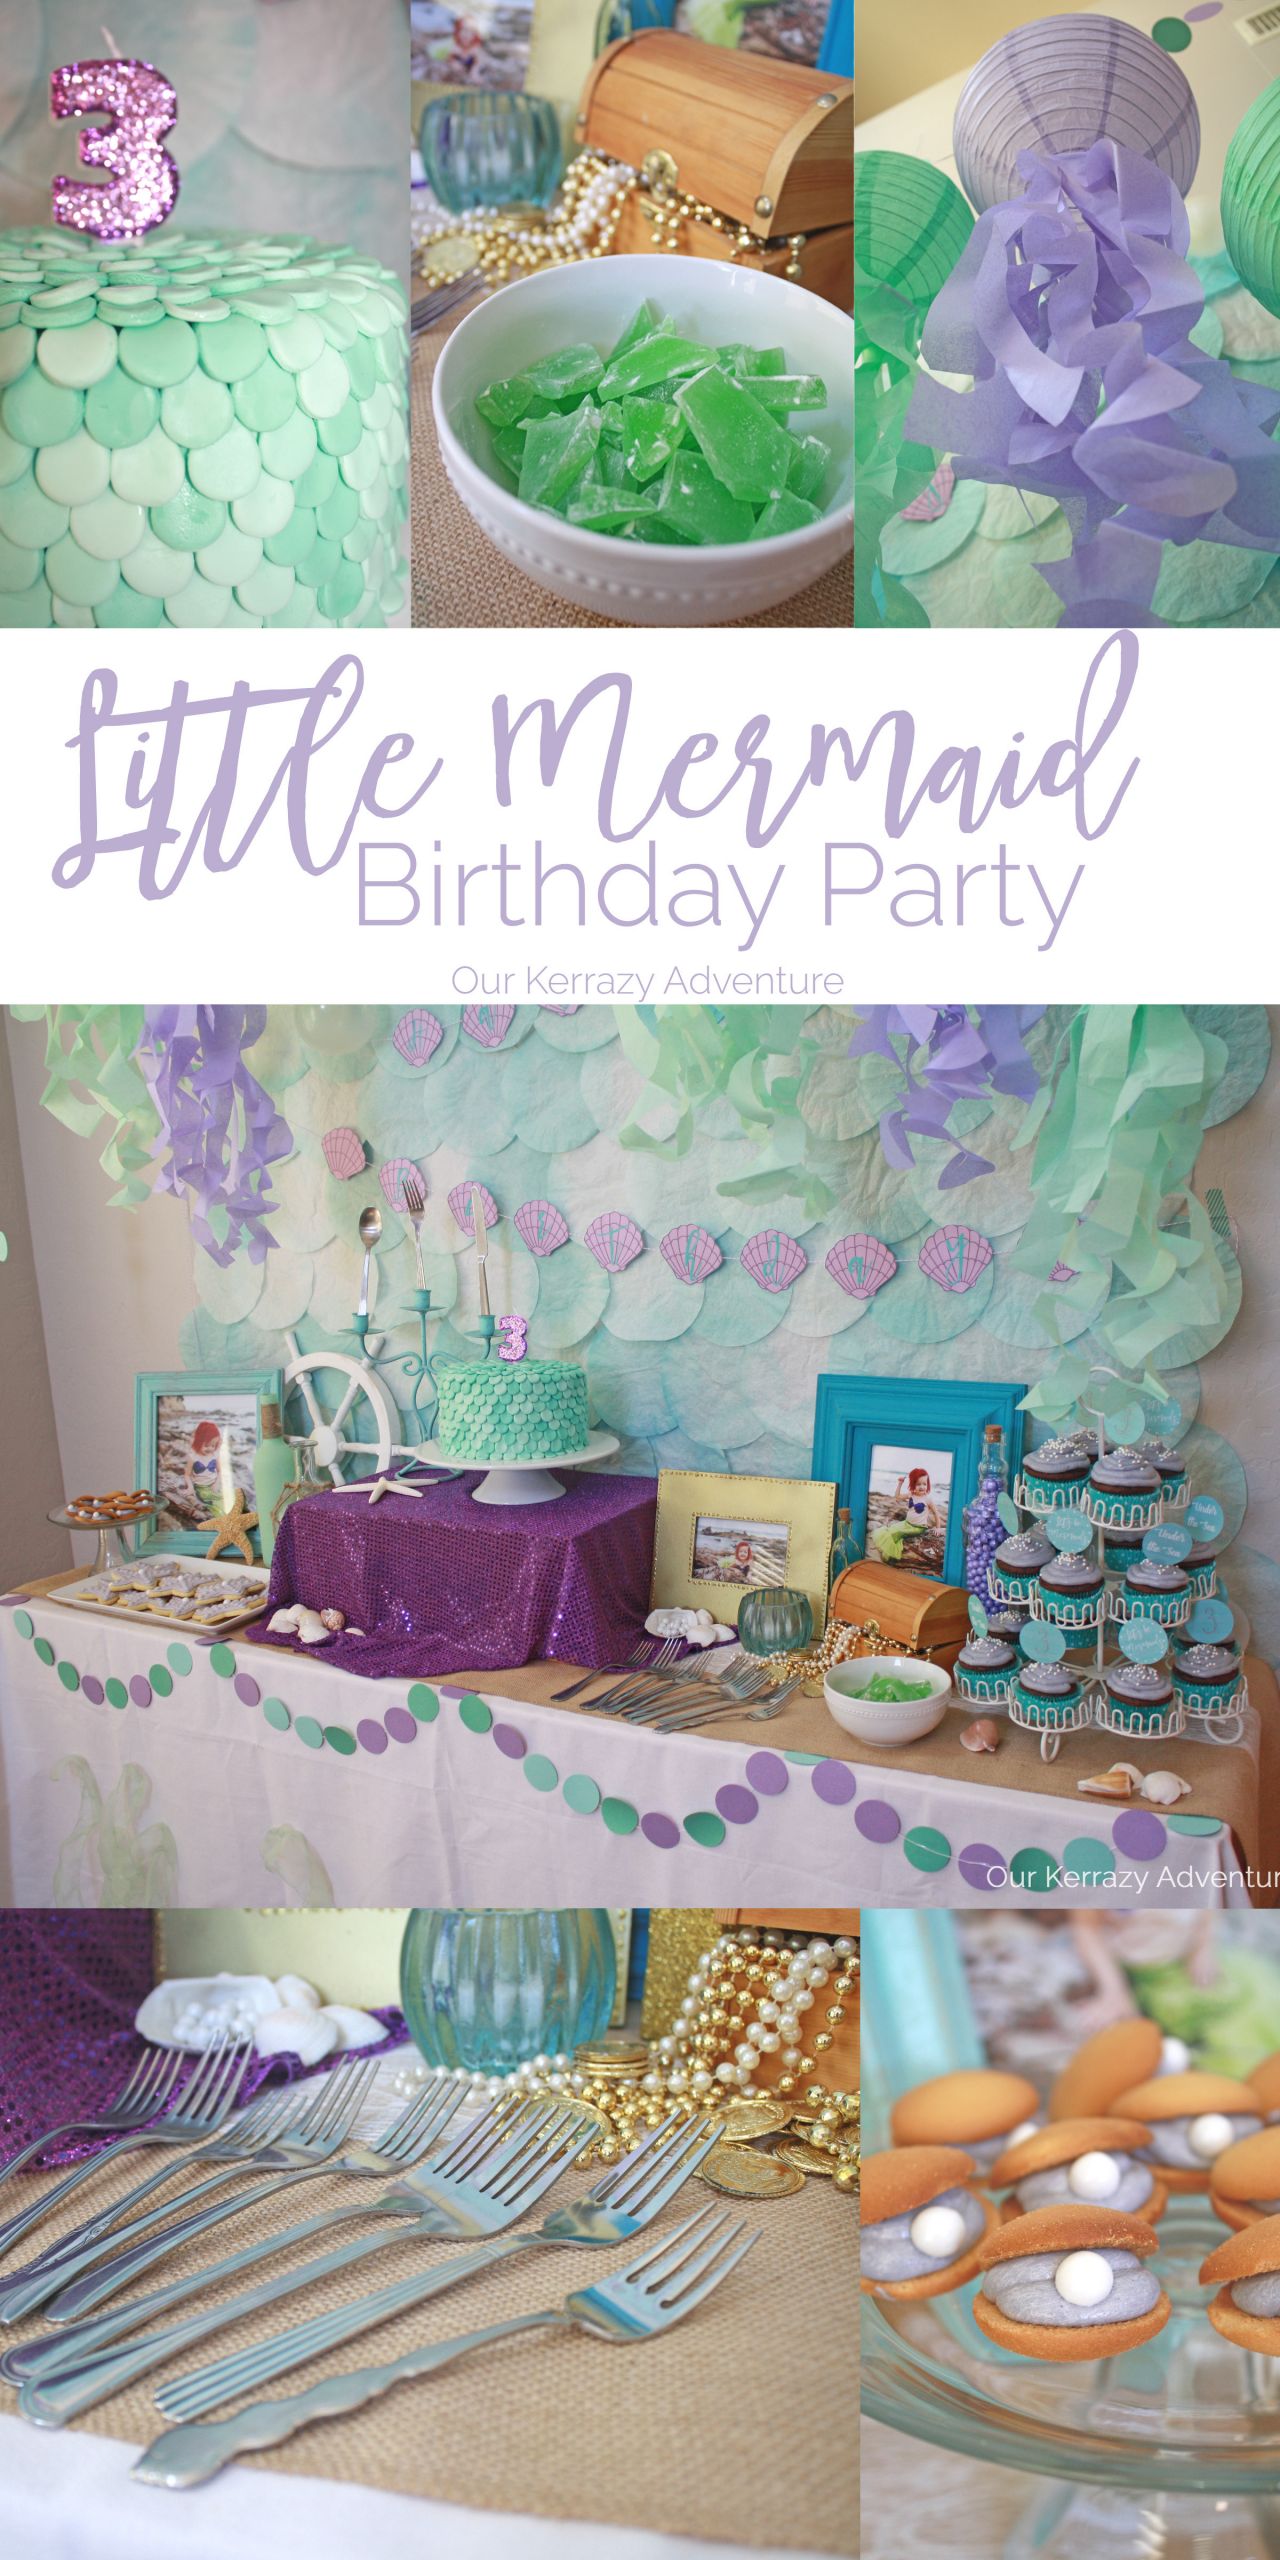 Little Girl Birthday Party Ideas
 Mermaid Party Ideas Our Kerrazy Adventure